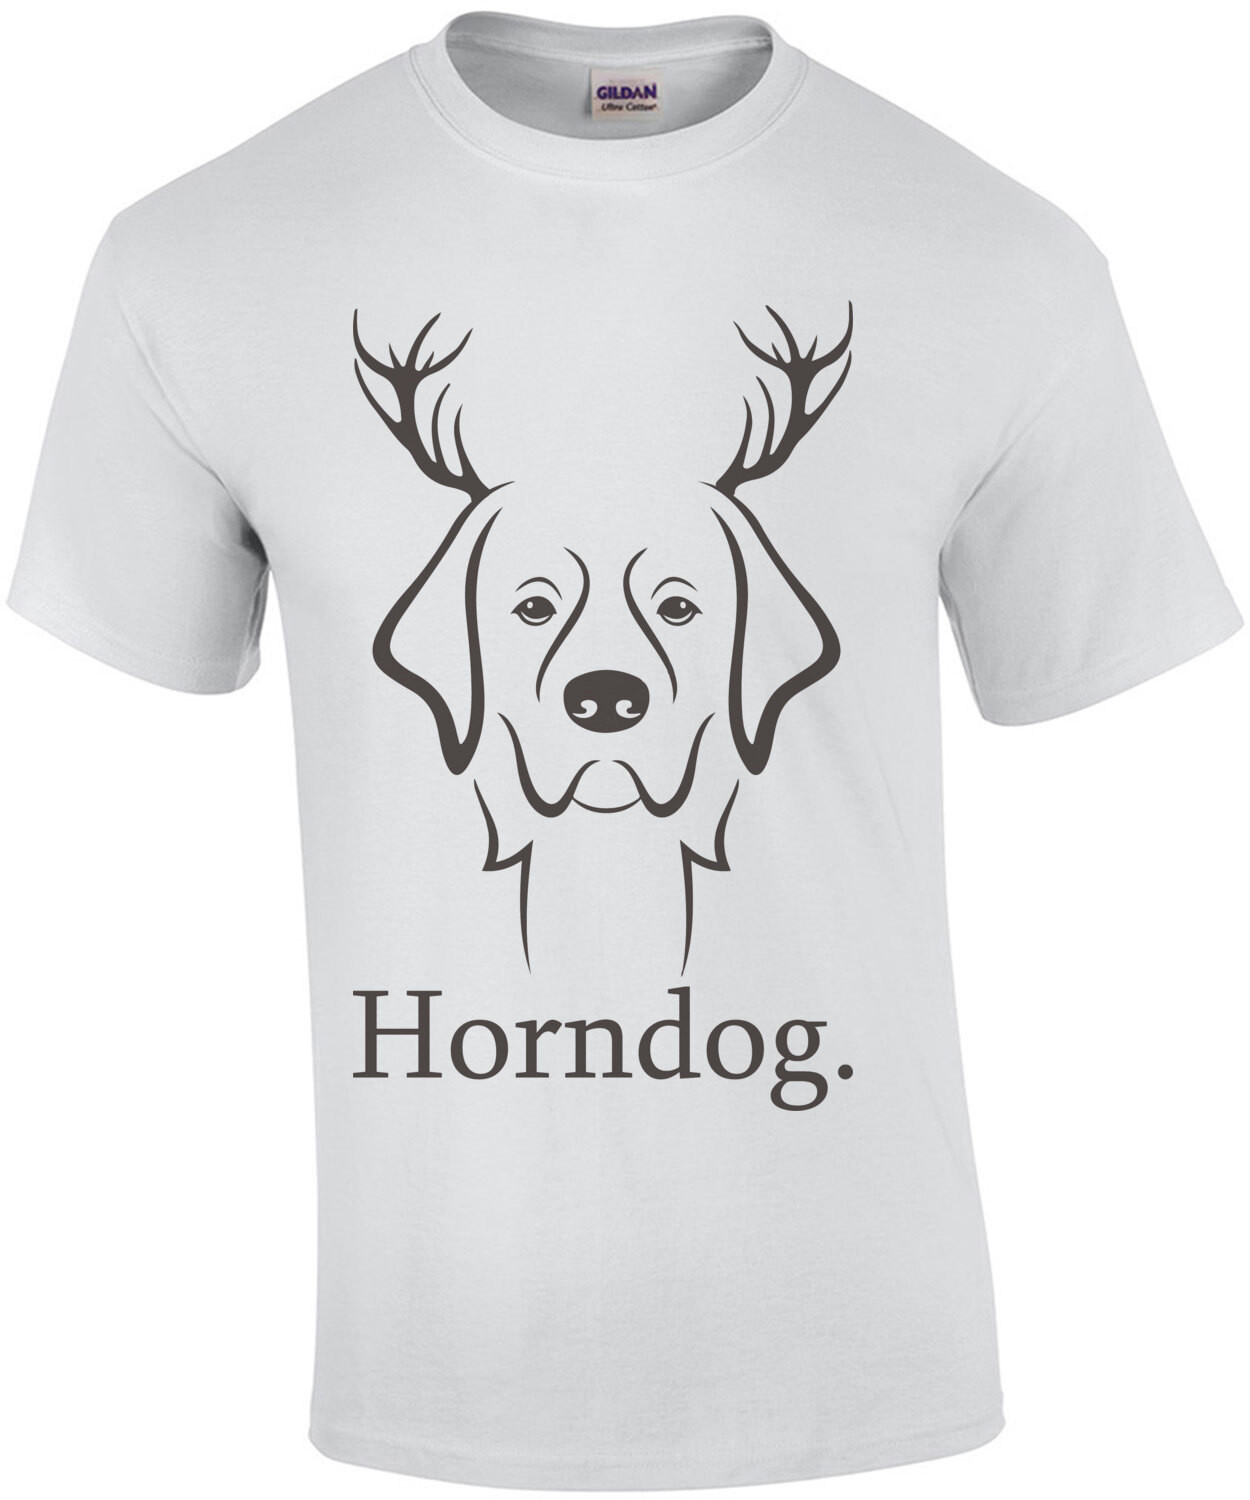 Horndog. Funny Pun T-Shirt